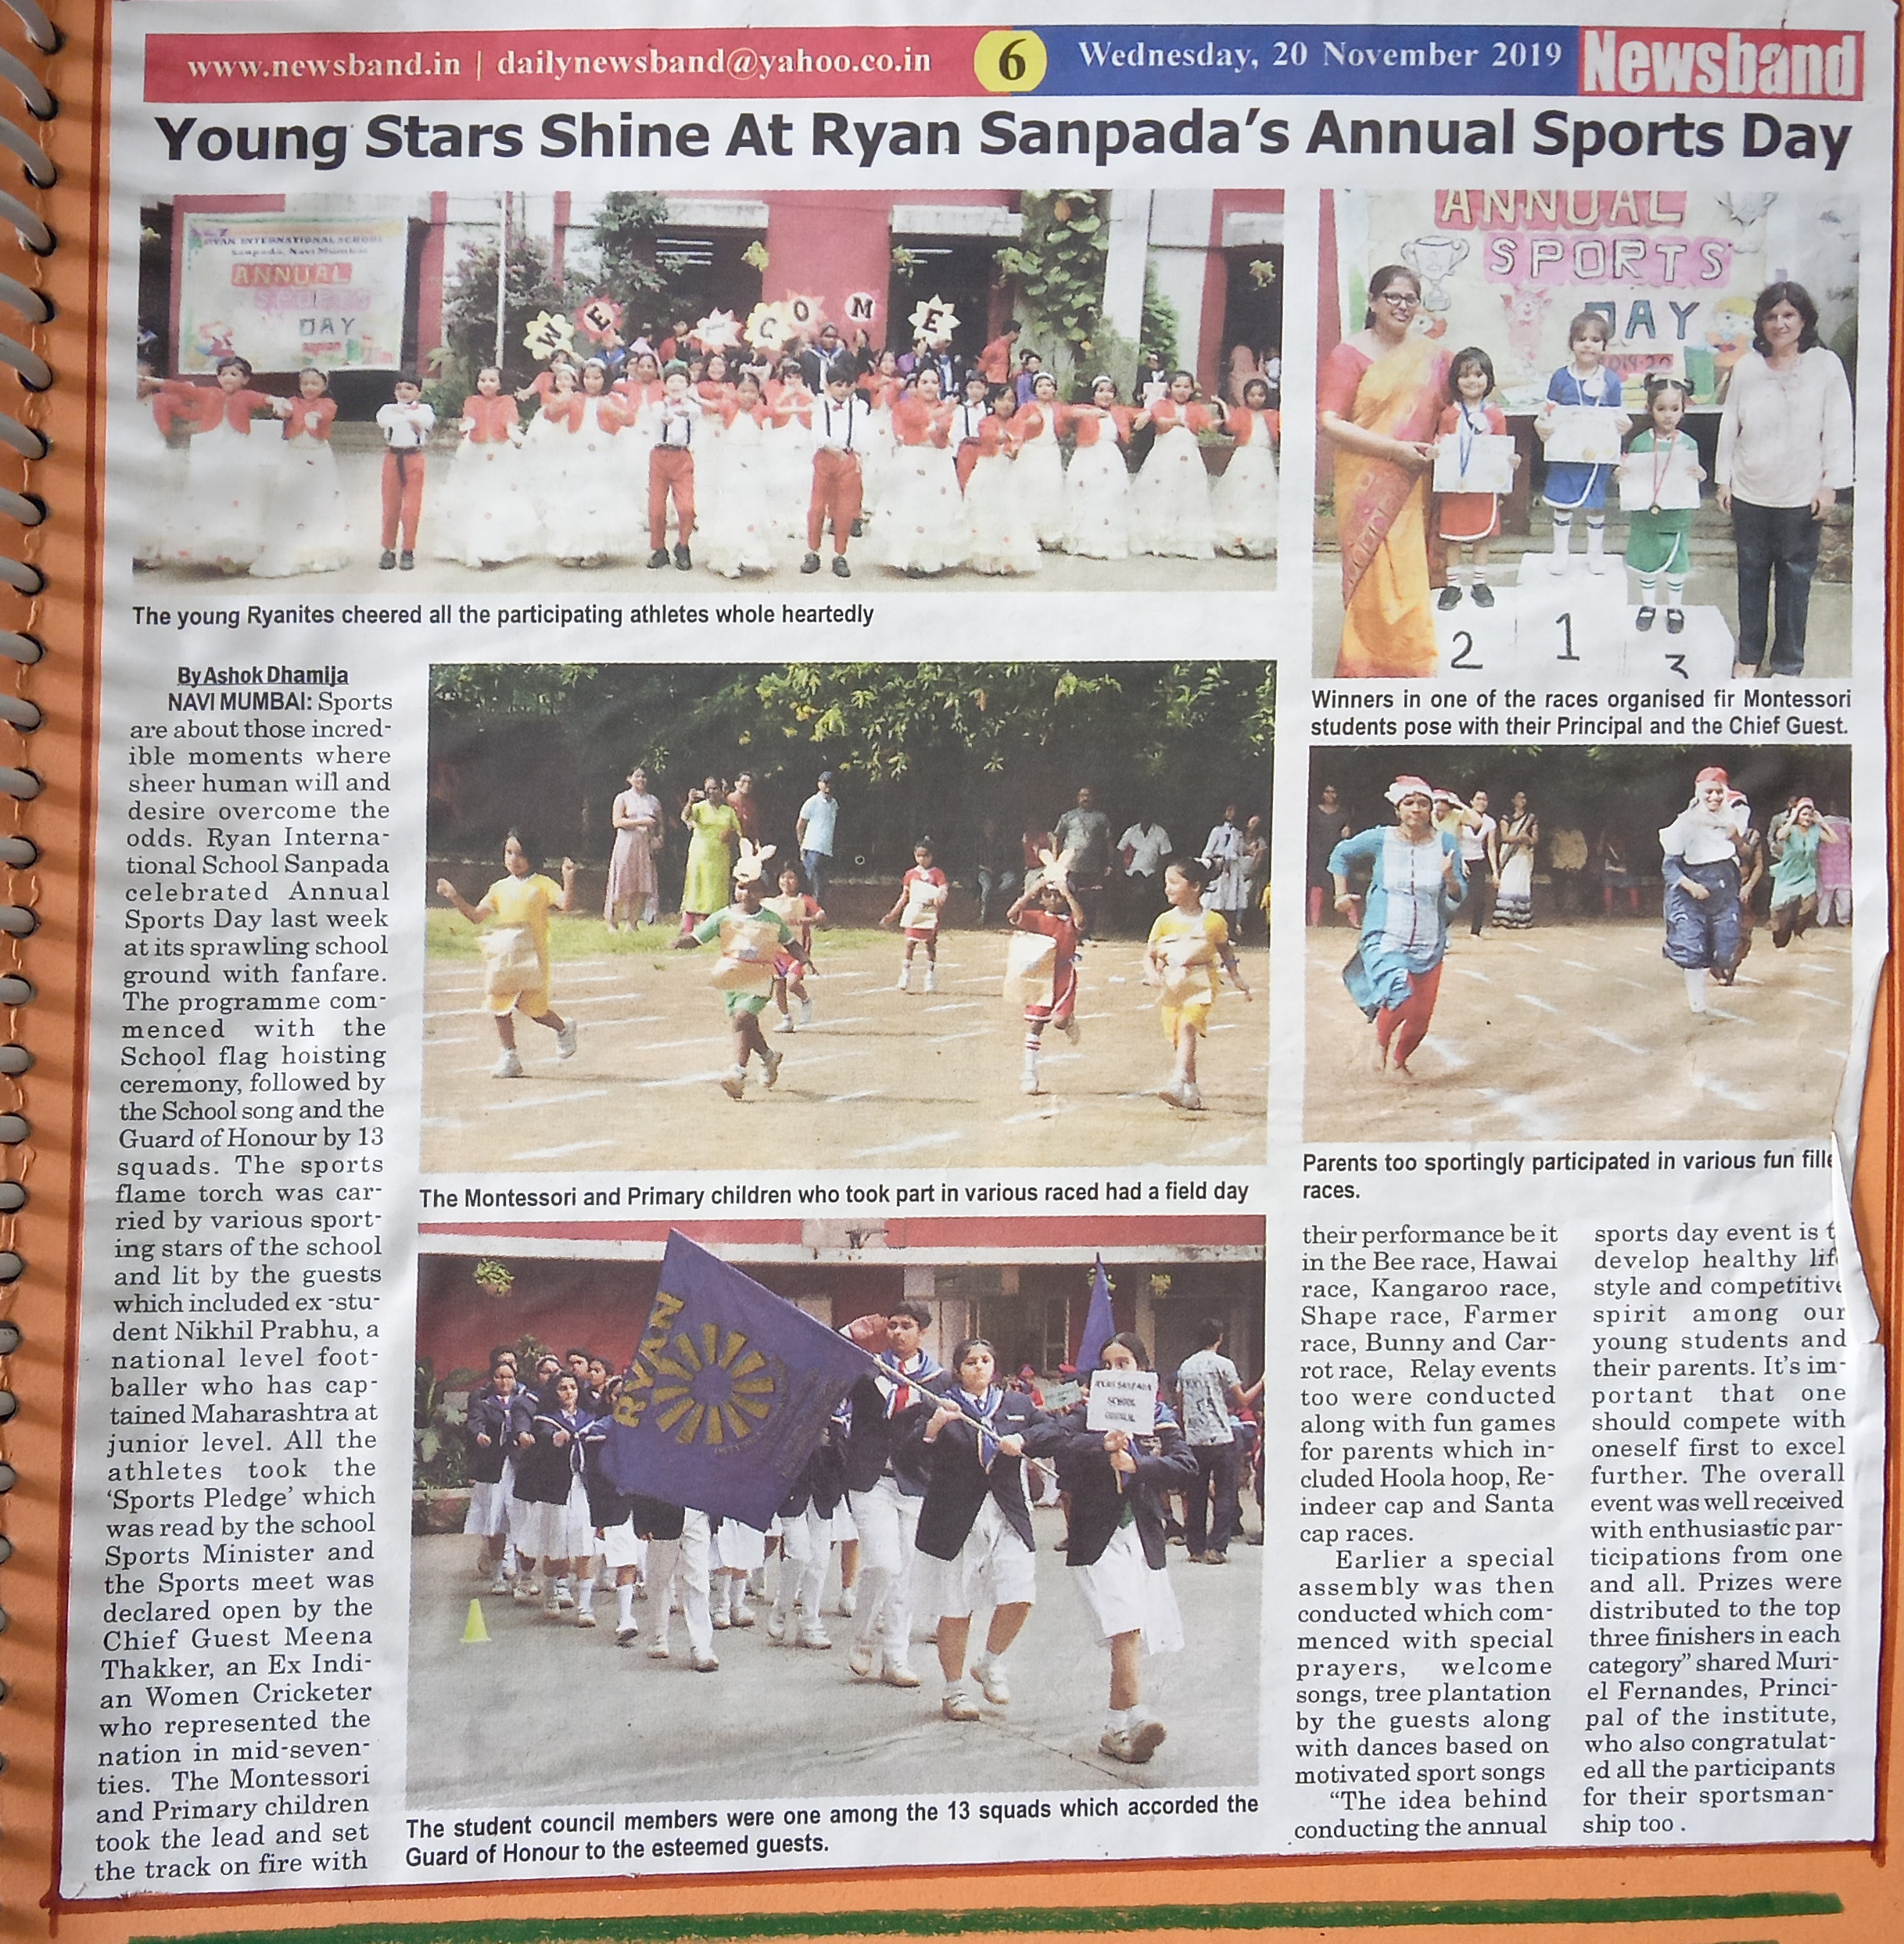 Annual Sports Day was featured in Newsband - Ryan International School, Sanpada